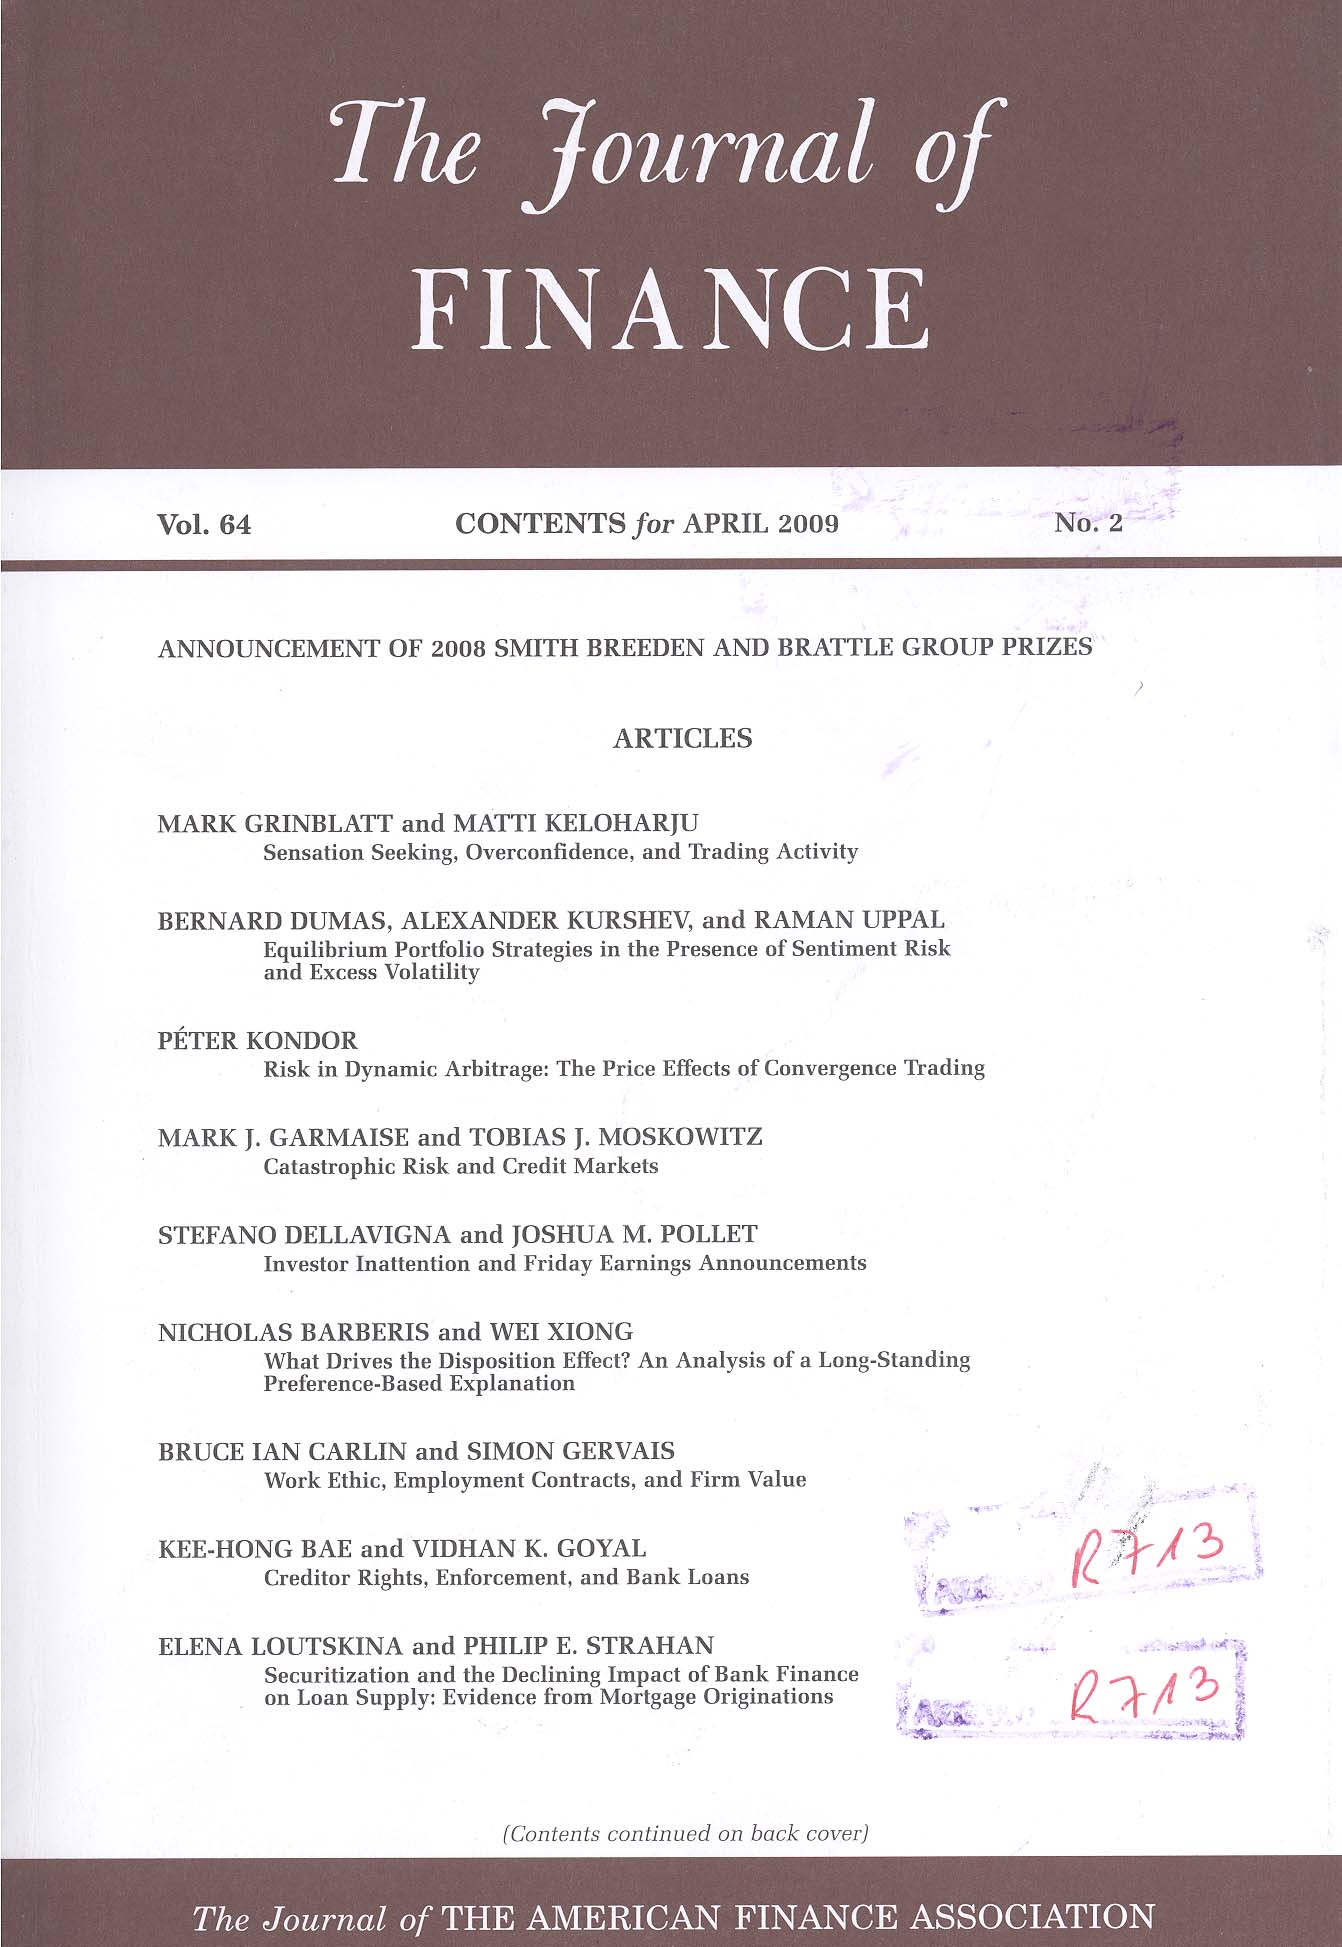 Imagen de la cubierta de Creditor rights, enforcement, and bank loans